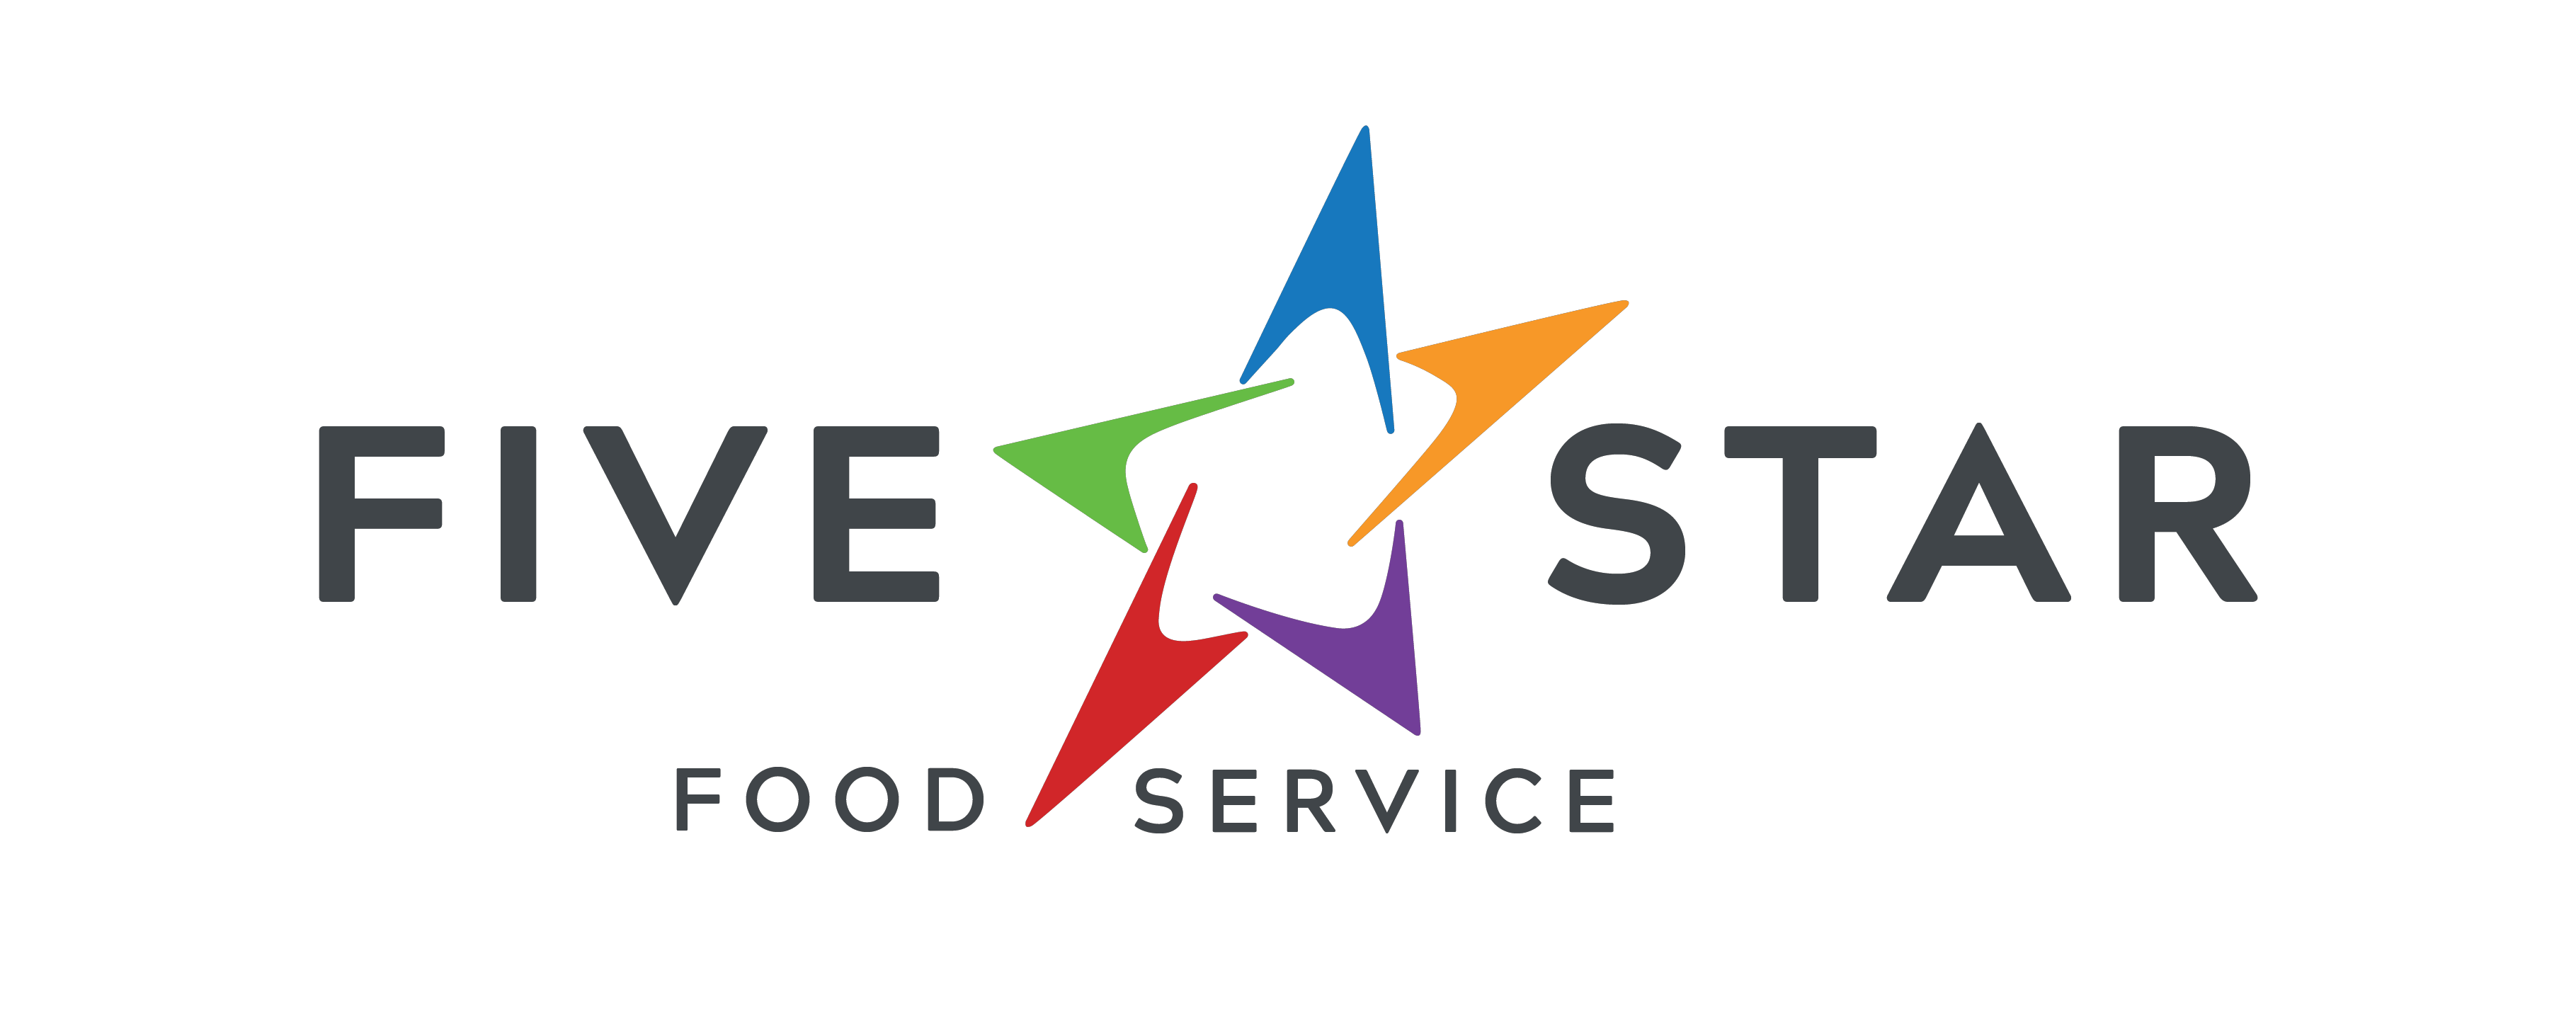 FiveStar Food Service